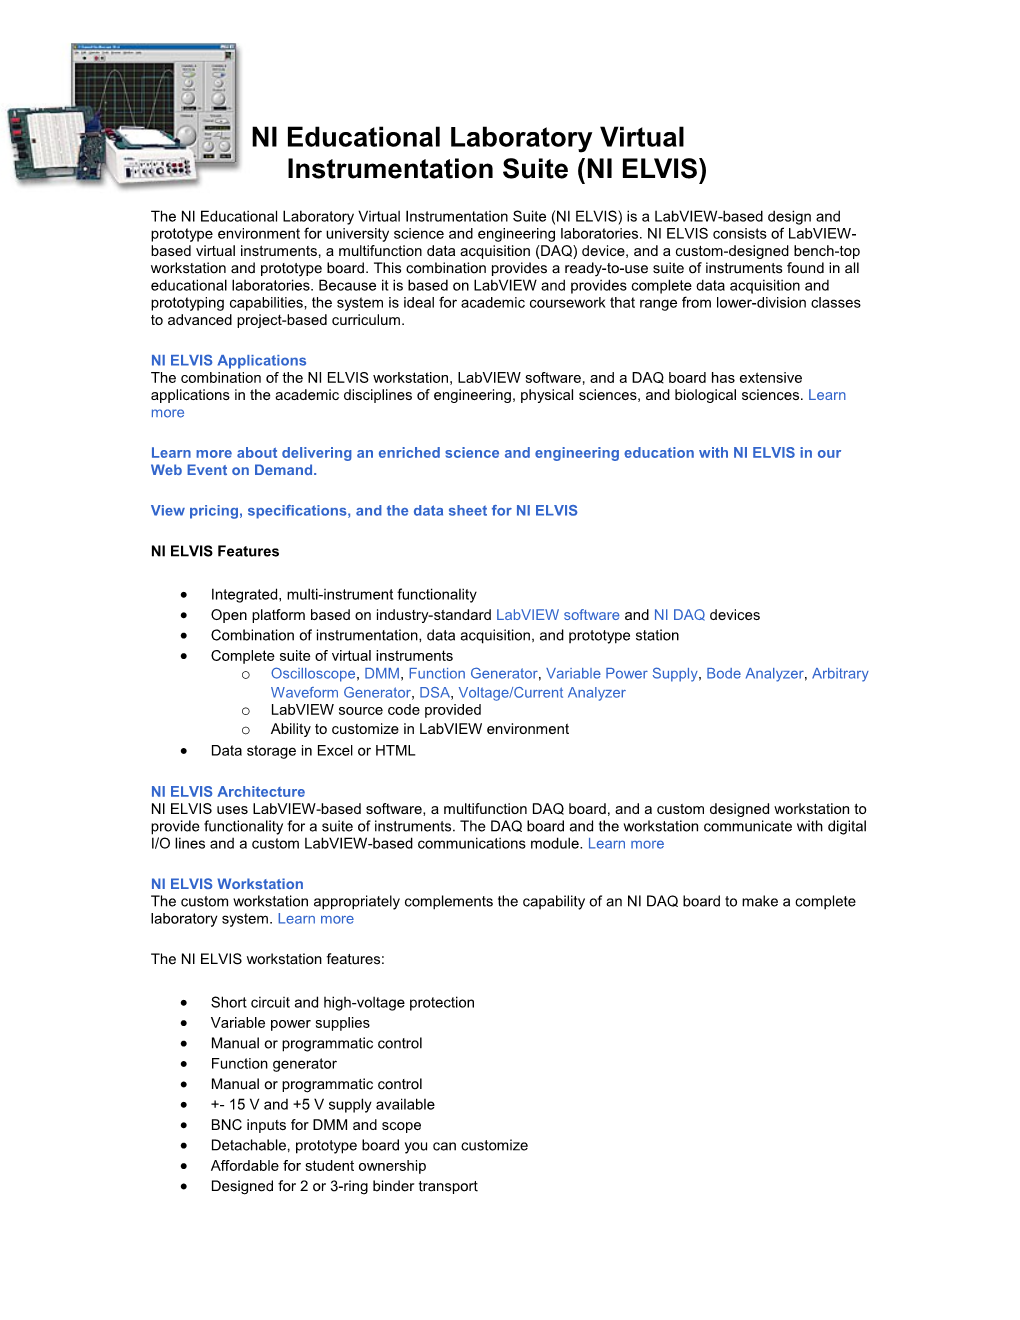 NI Educational Laboratory Virtual Instrumentation Suite (NI ELVIS)